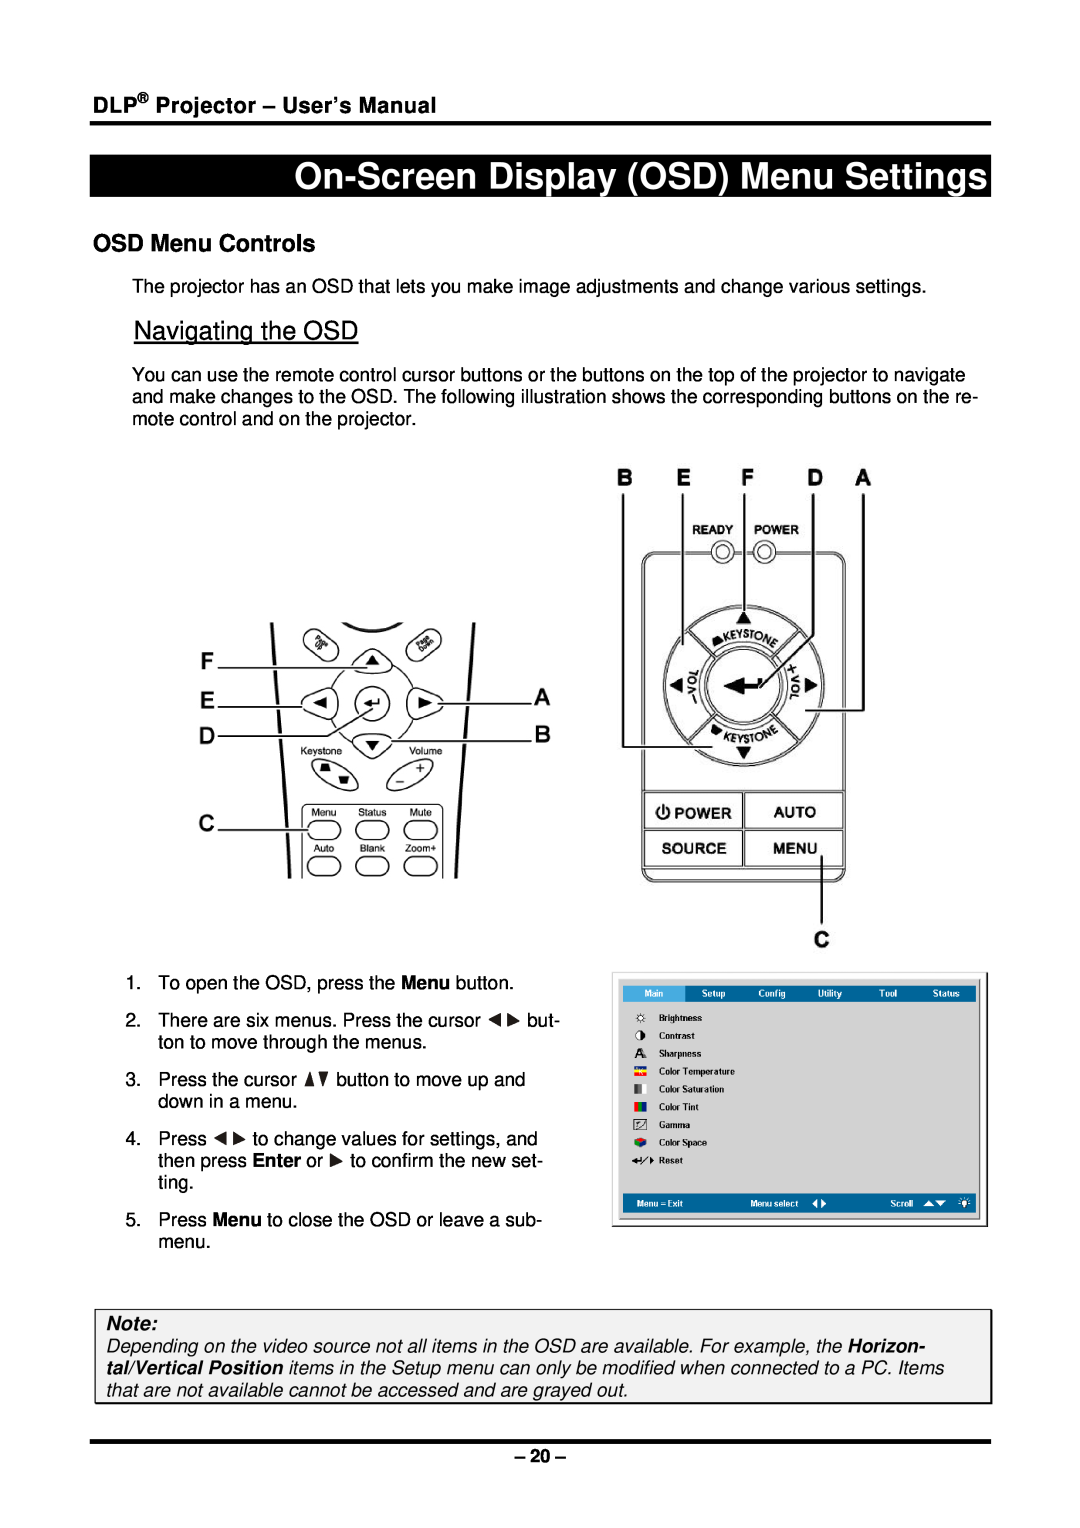 Planar PR5022 On-Screen Display OSD Menu Settings, Navigating the OSD, OSD Menu Controls, DLP Projector - User’s Manual 